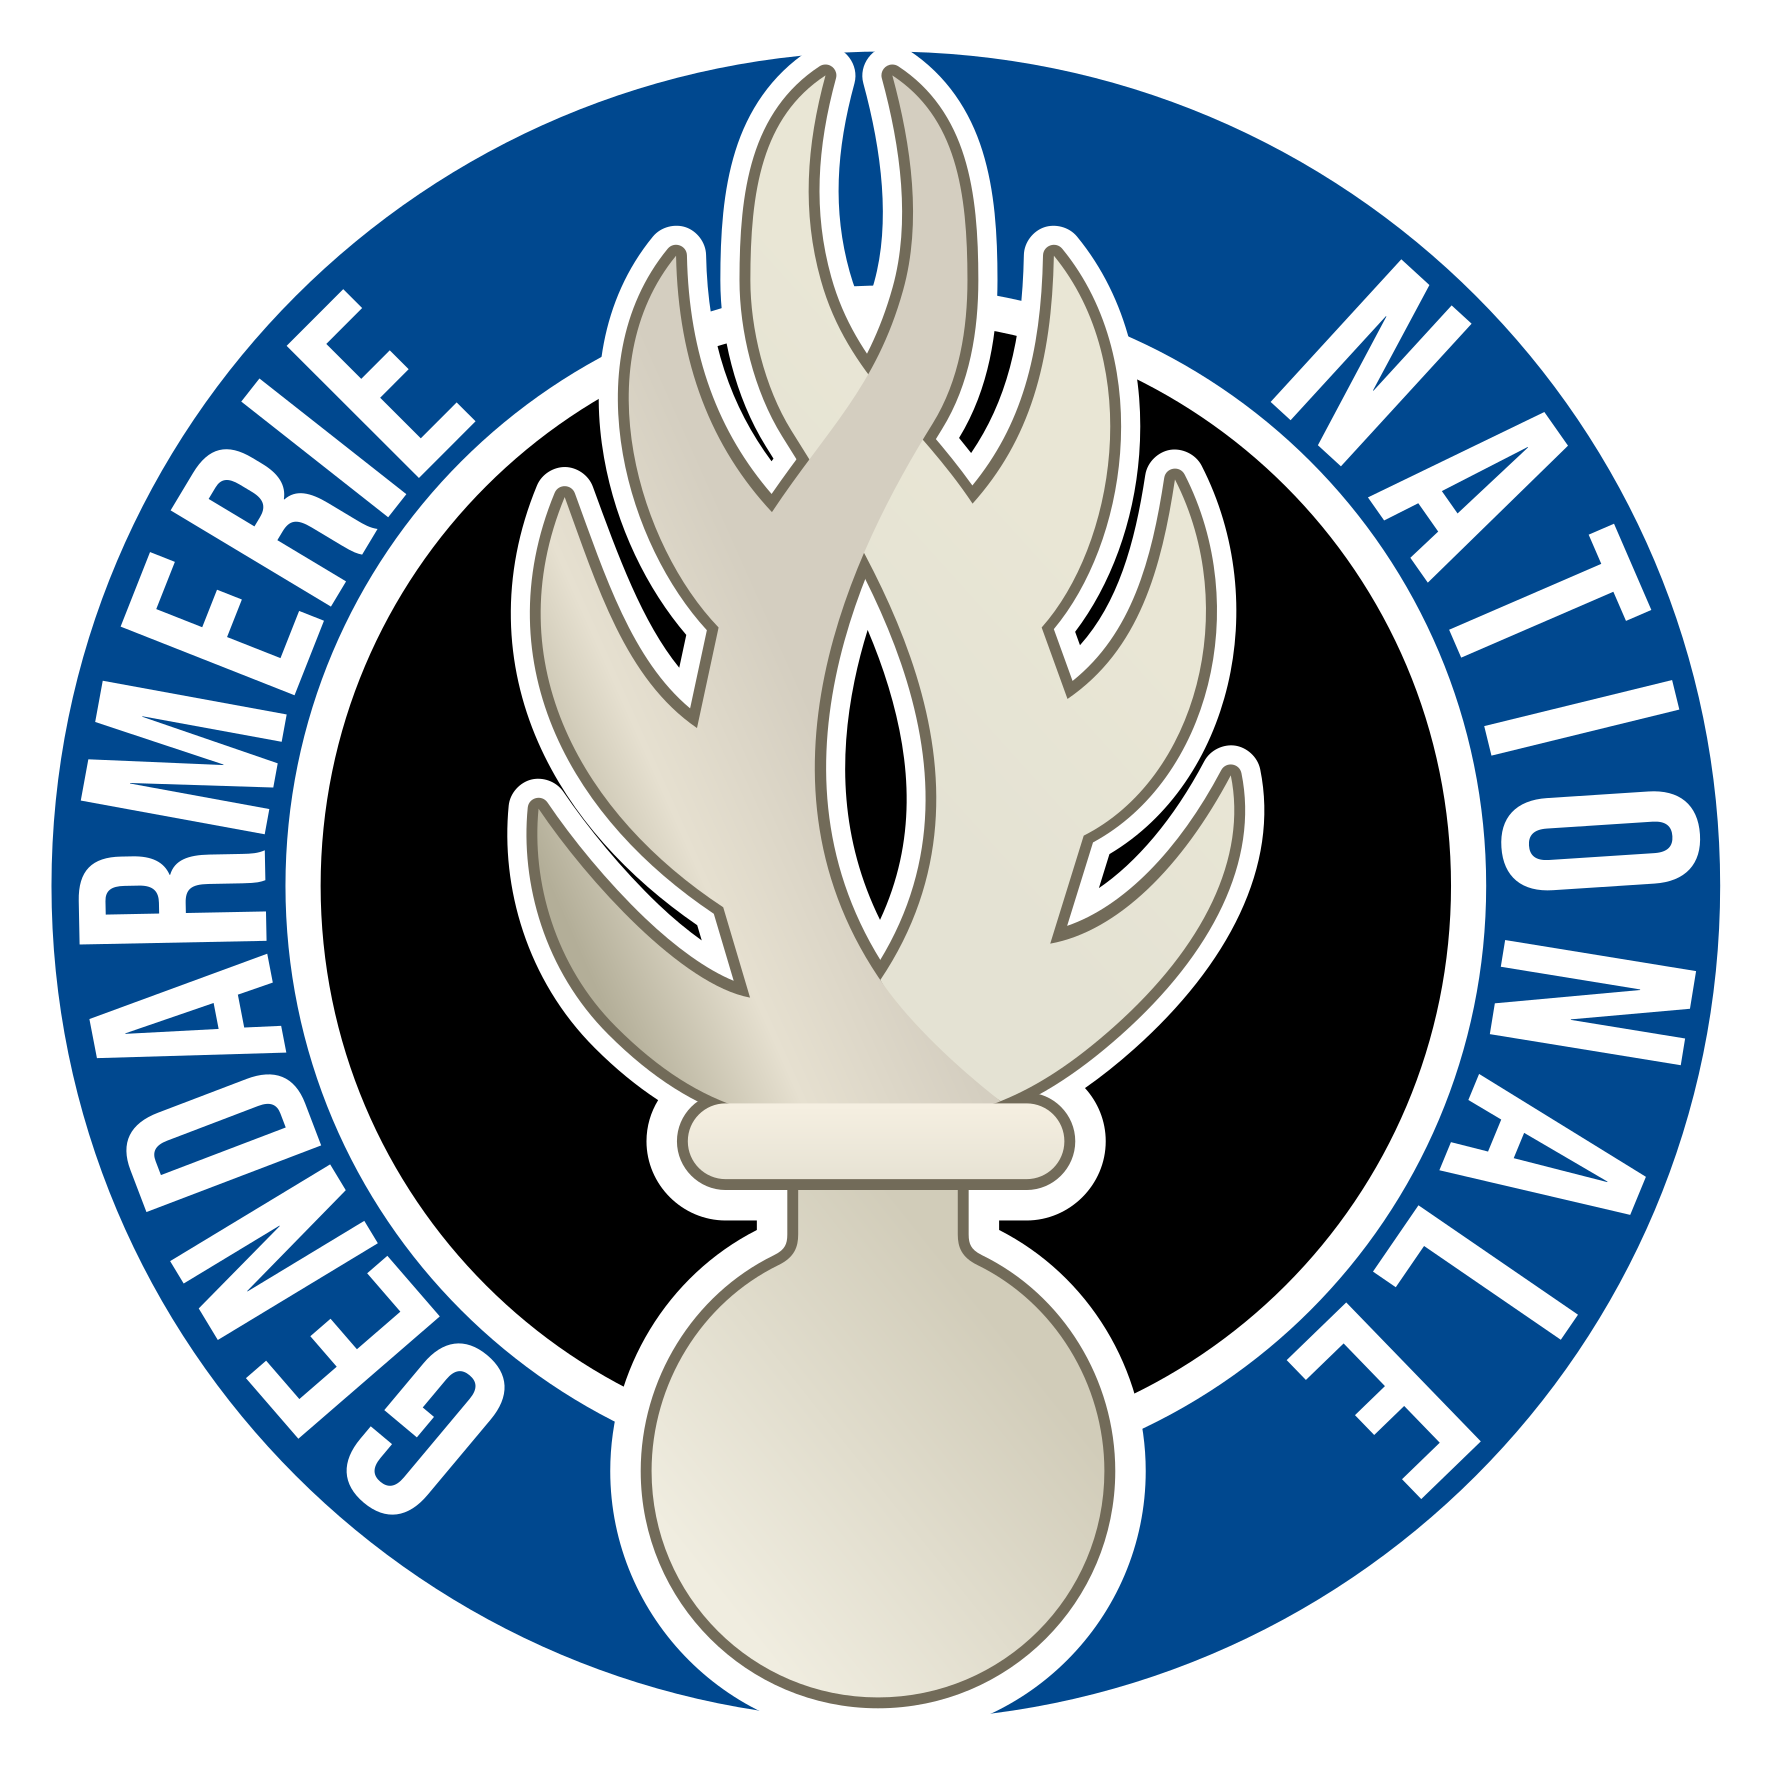 File:Emblème Gendarmerie Nationale.svg - Wikimedia Commons